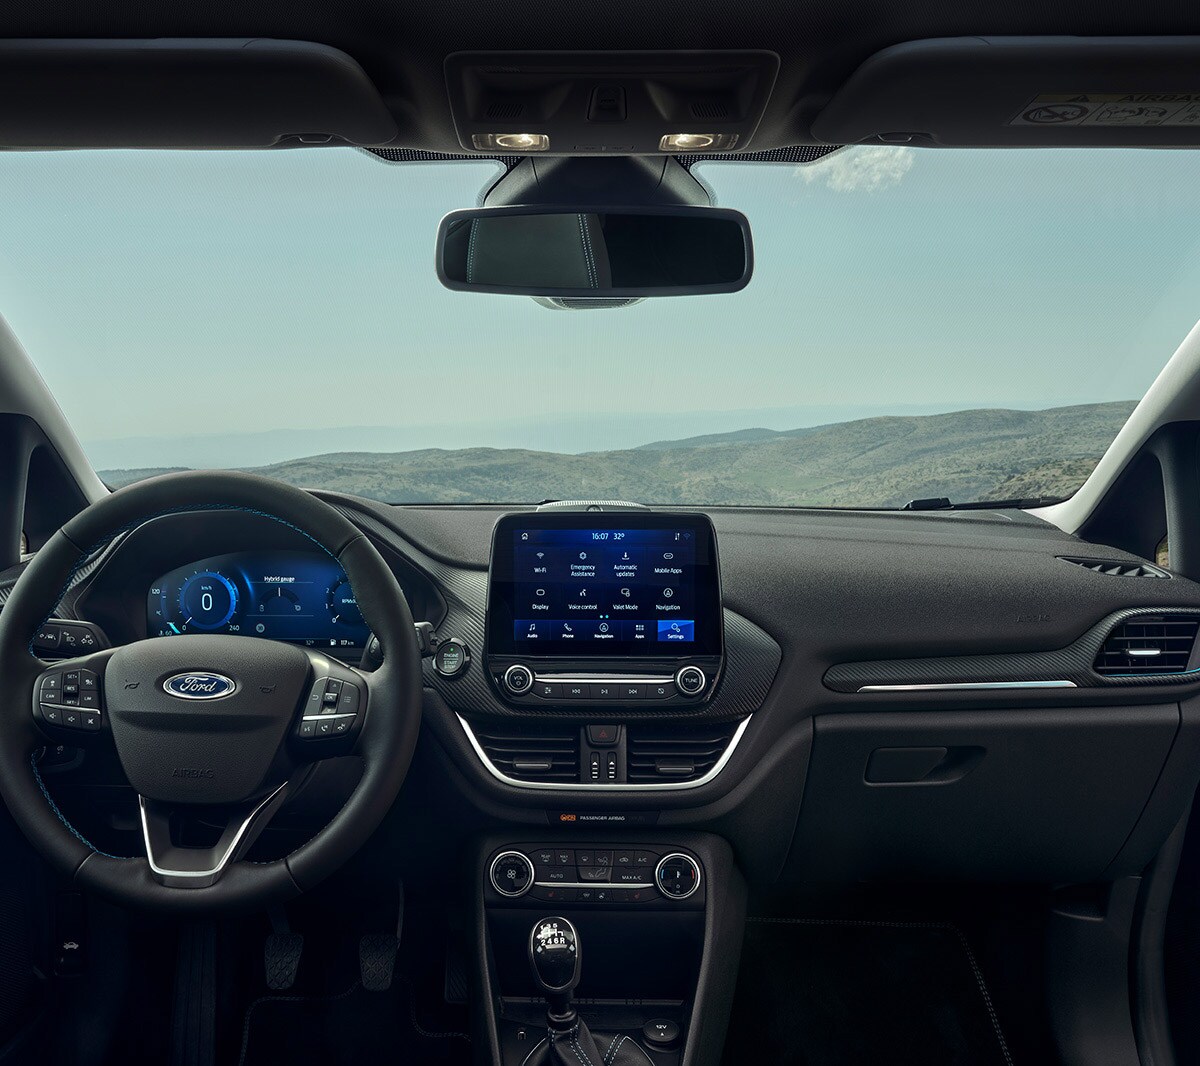 Ford Fiesta interior cockpit view